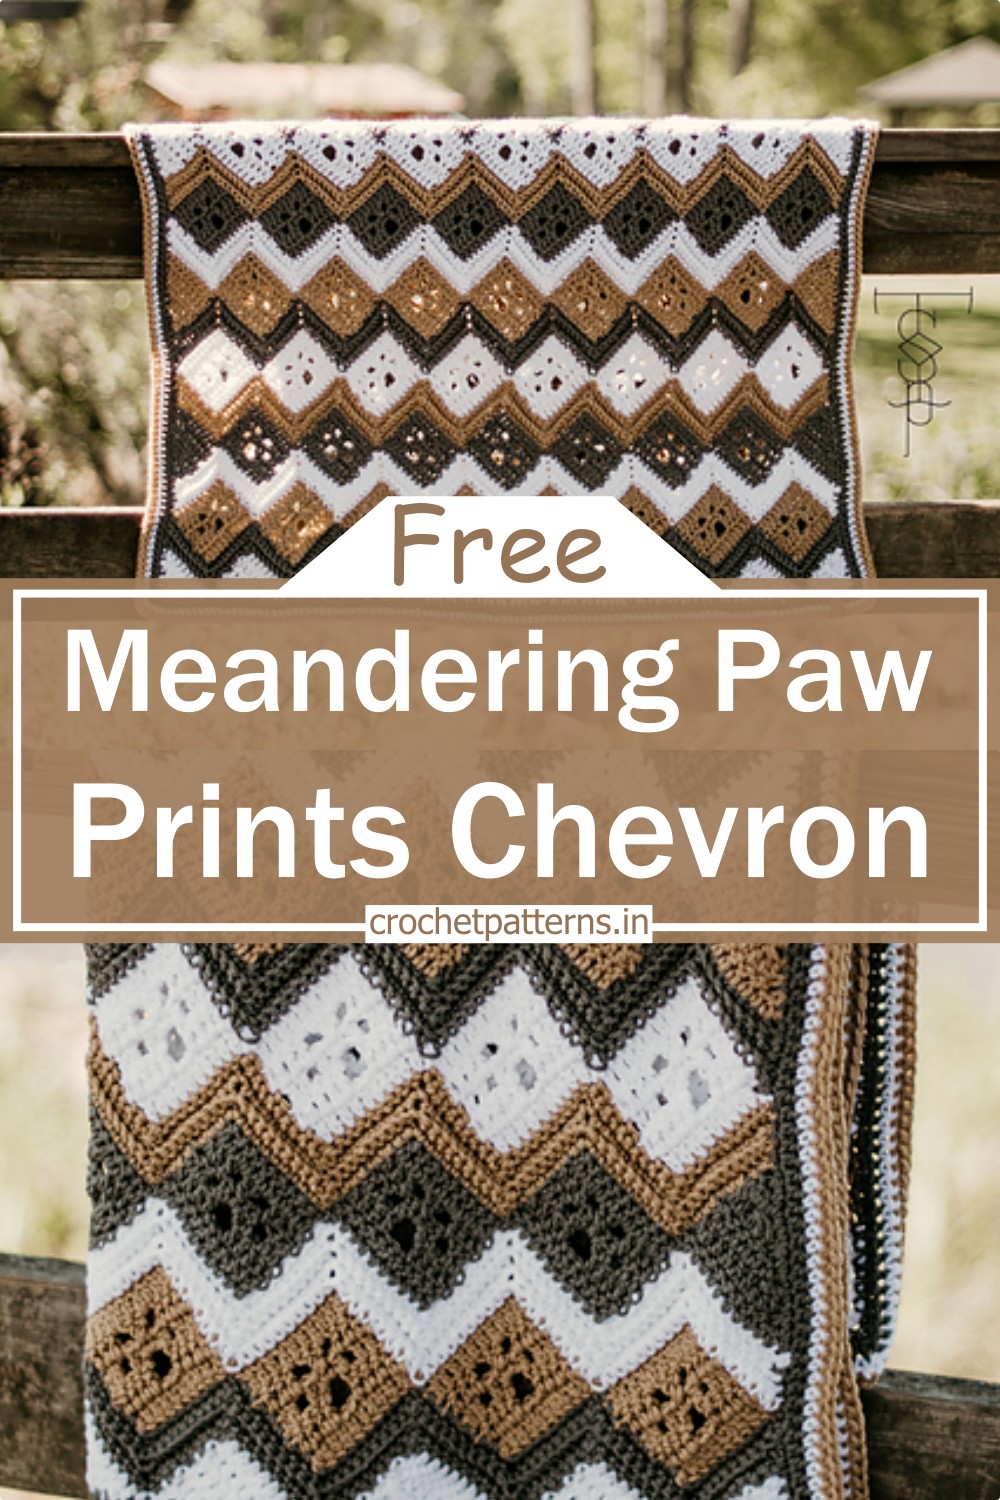 Meandering Paw Prints Chevron